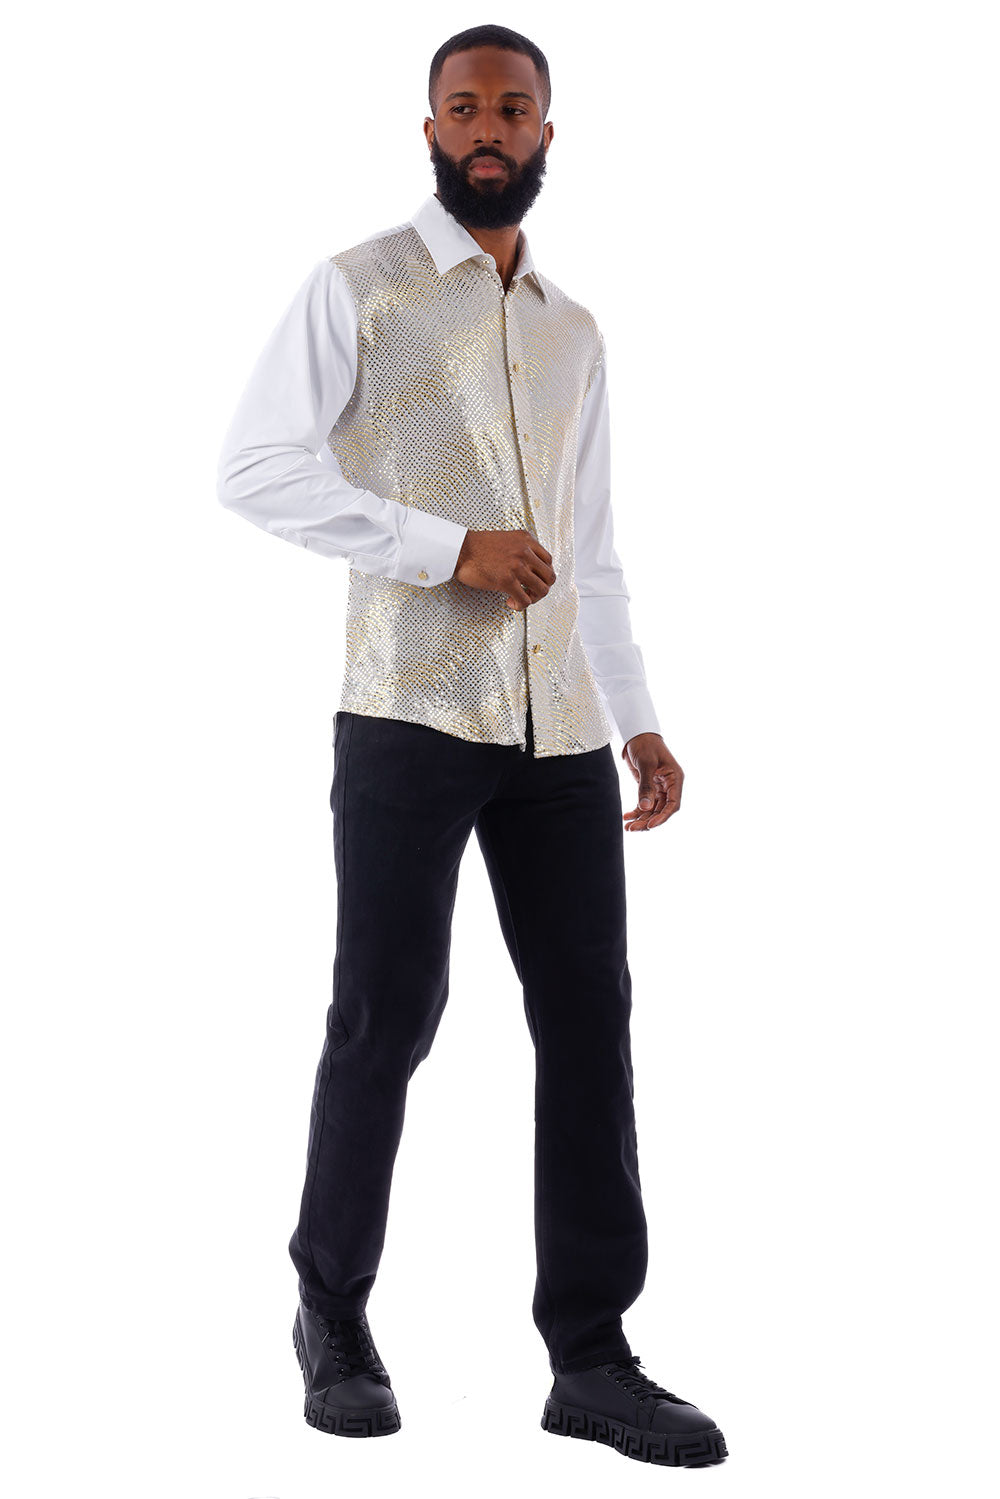 BARABAS Men's Polka Dot Linear Geometric Long Sleeve Shirt 4B43 White Gold